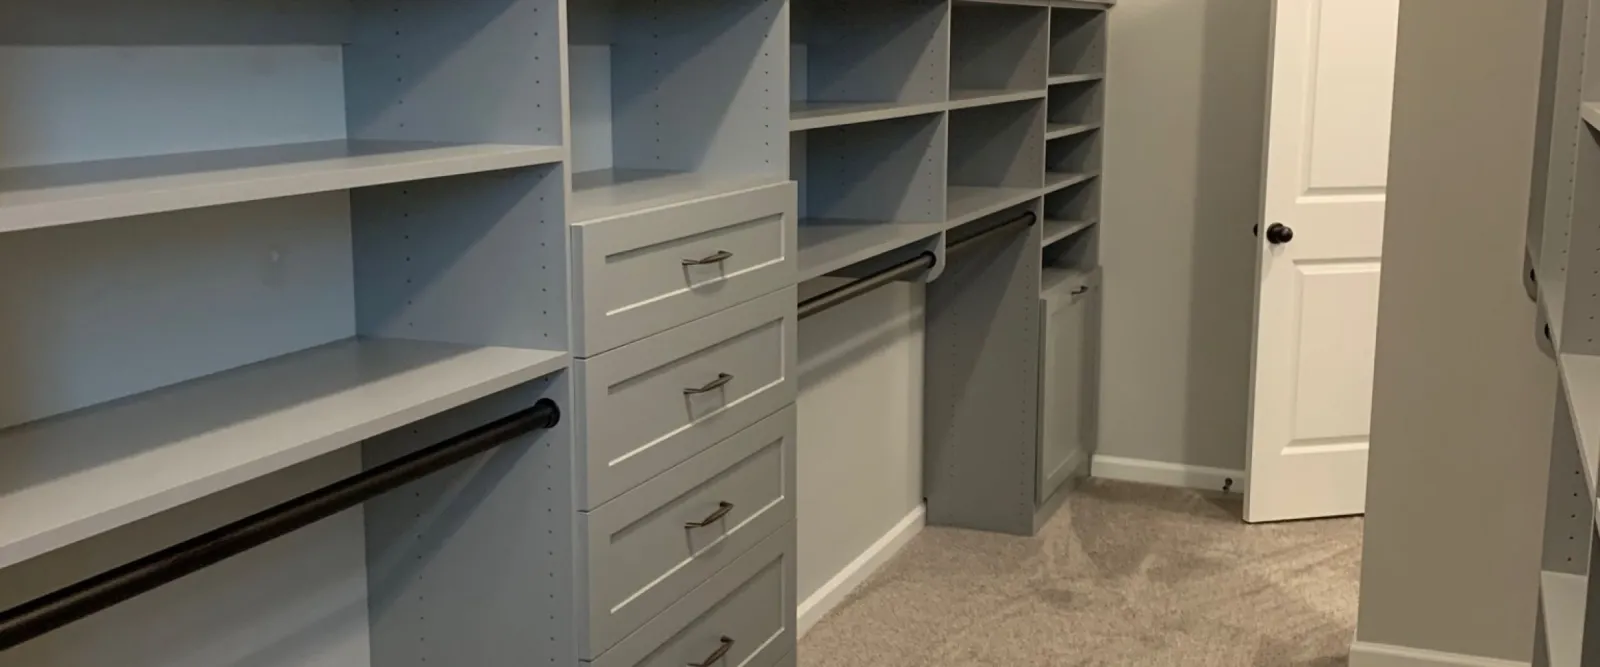 Customizable Closet Storage Systems for Homeowners in Atlanta, GA